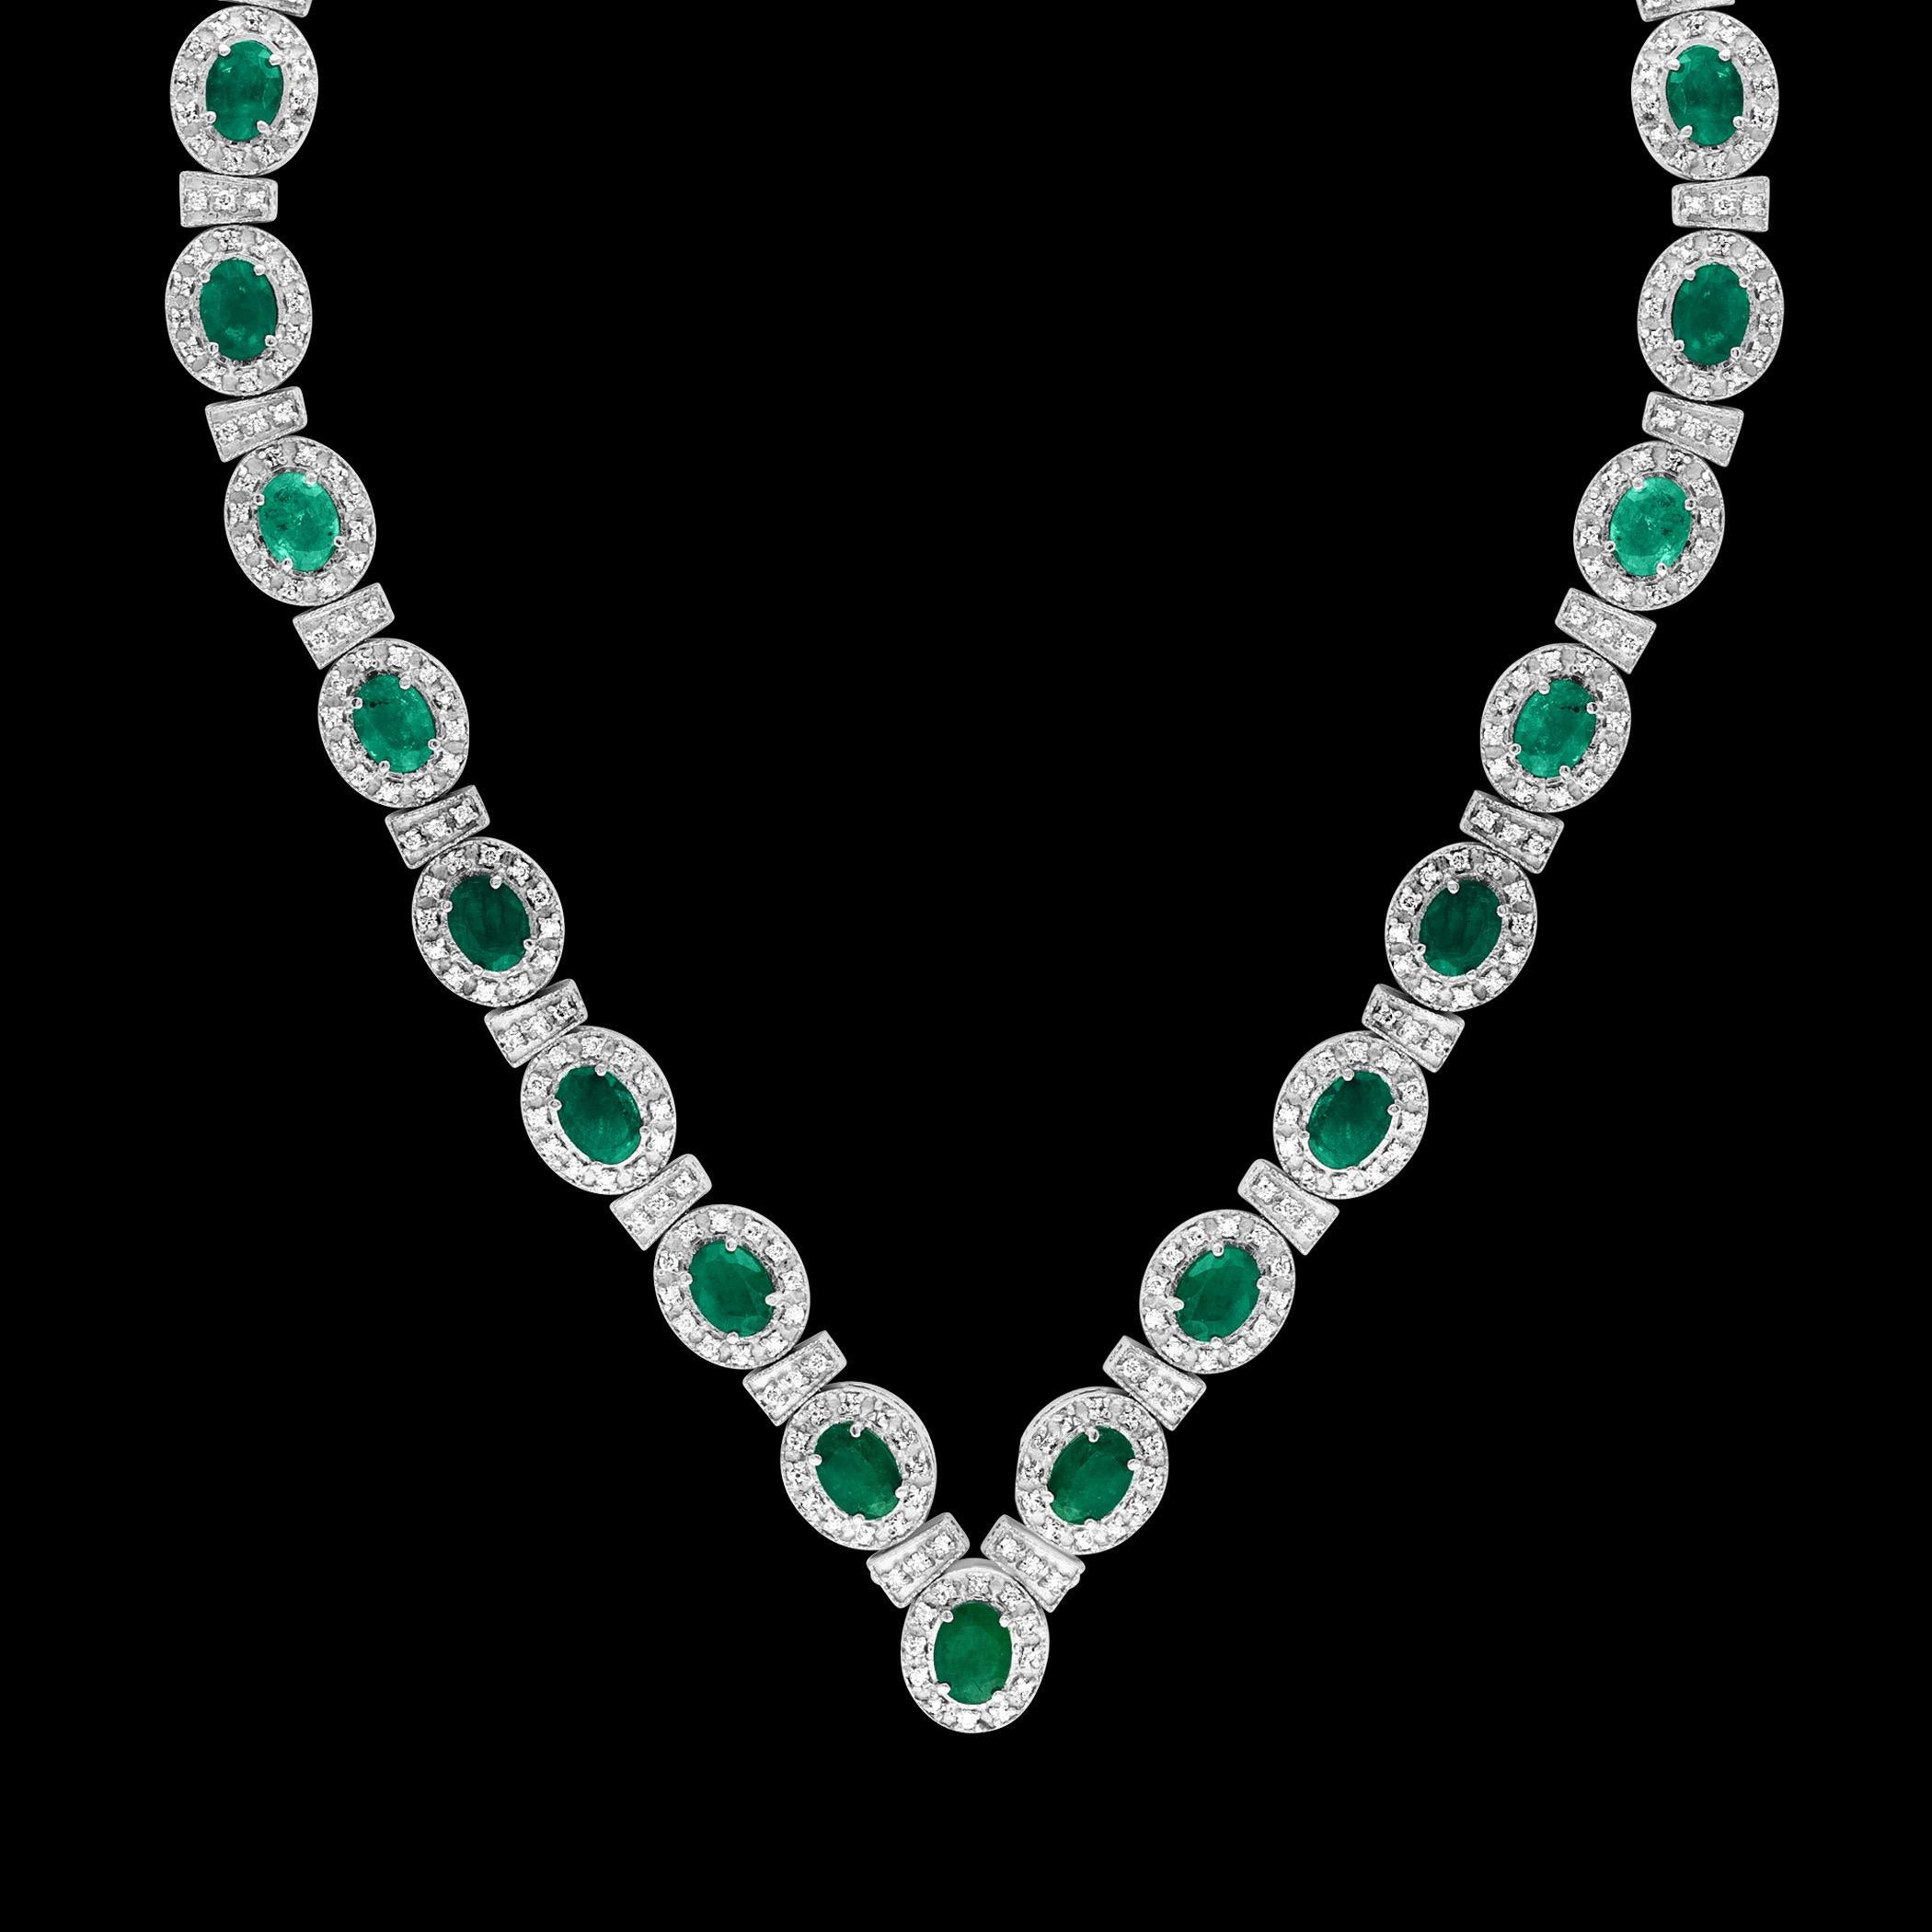 28 Carat Oval Shape Natural Emerald & 5 Carat Diamond Necklace in 14 Karat Gold For Sale 9